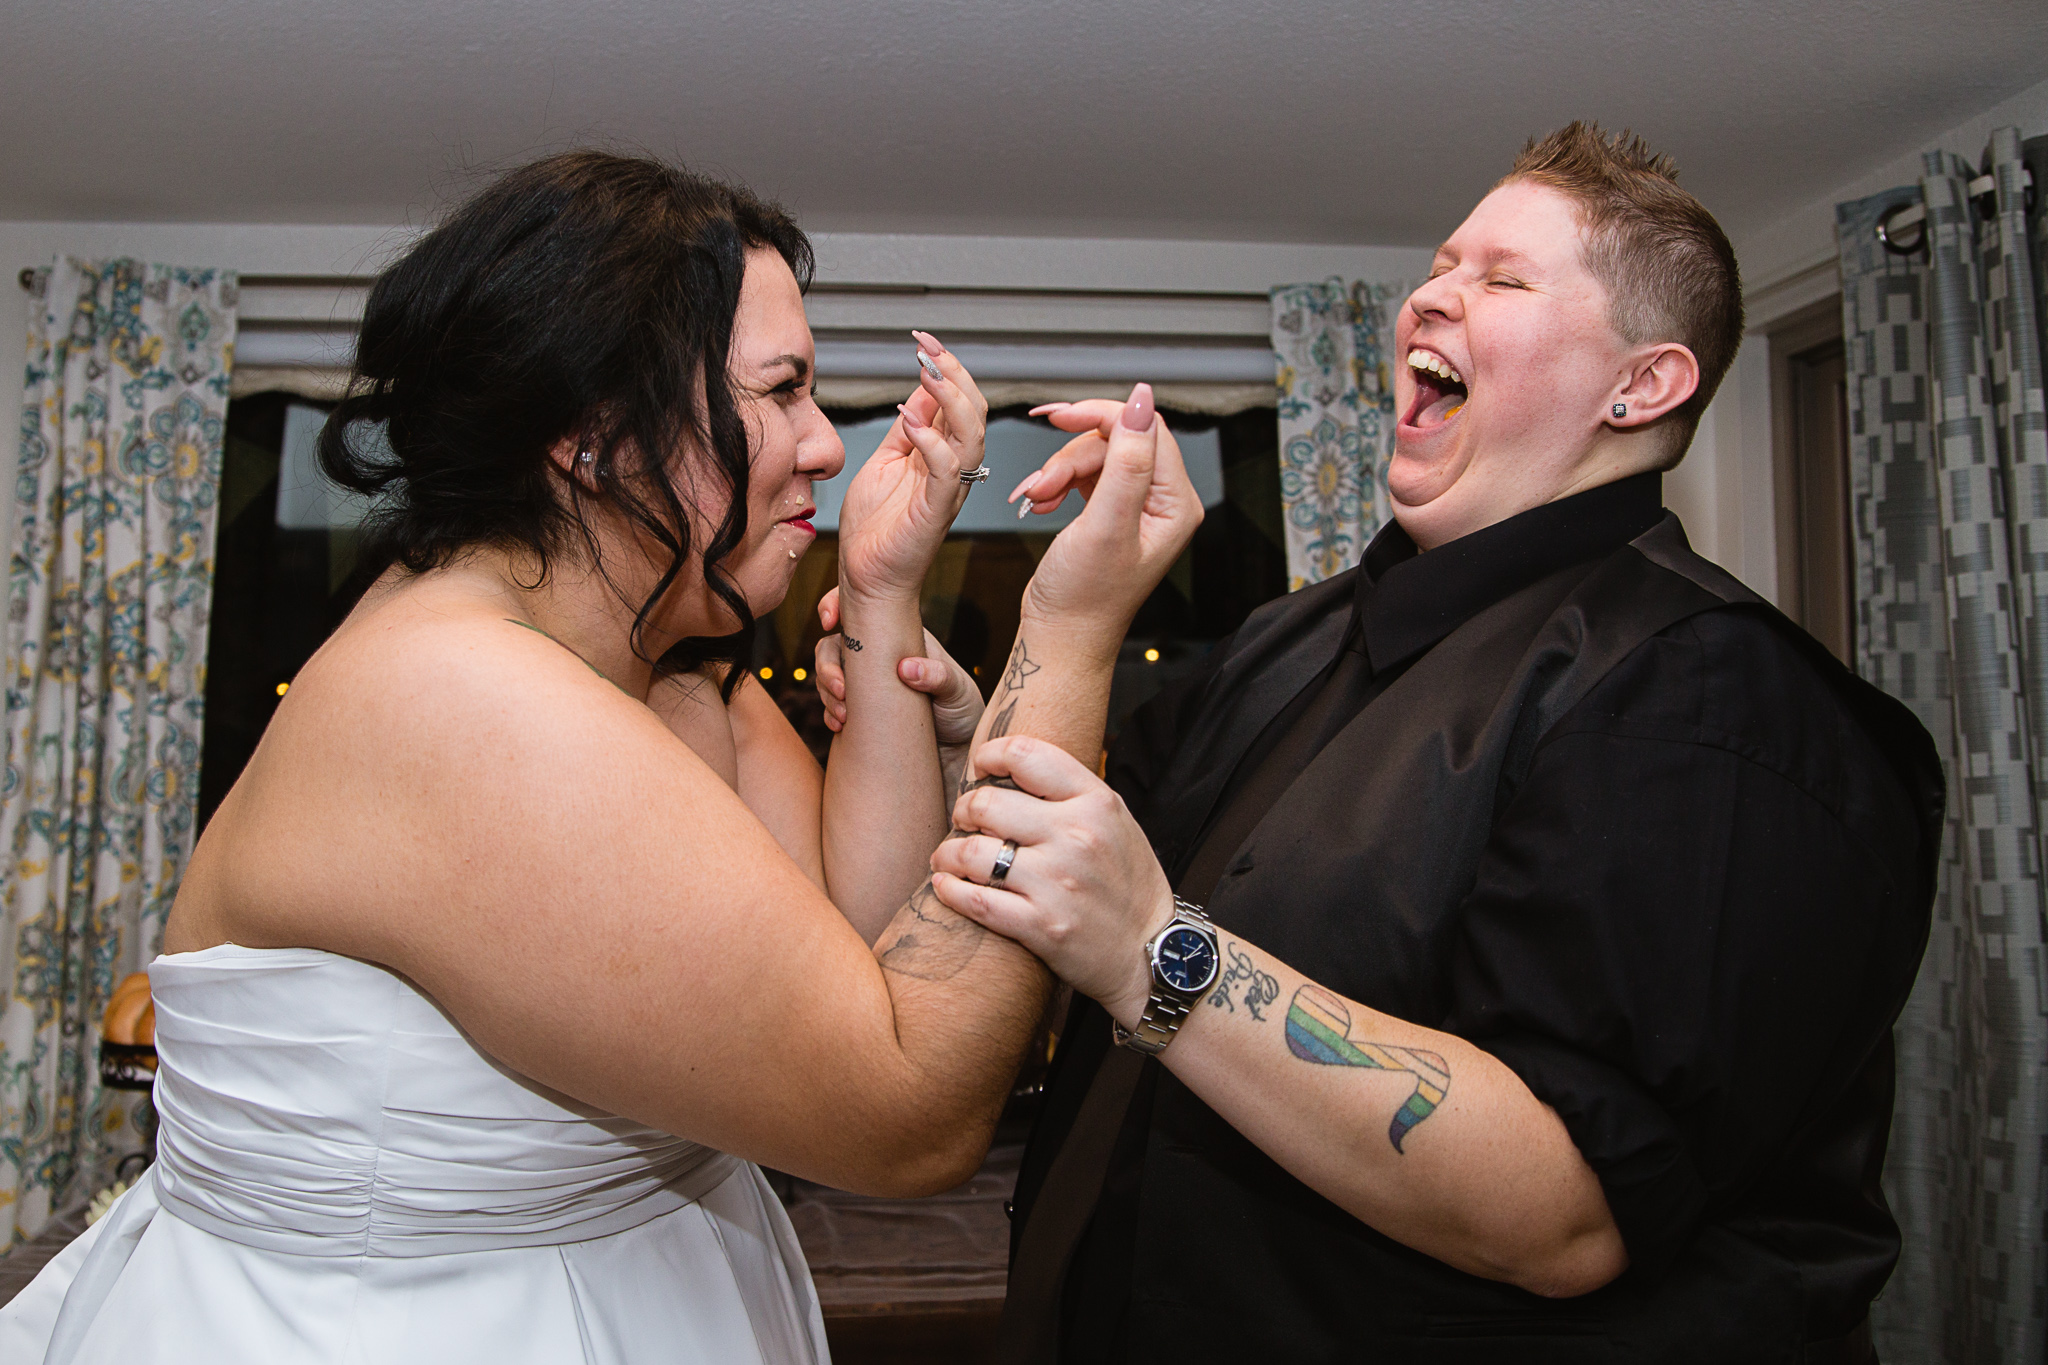 Same sex couple share a long john donut instead of cake on their wedding night.